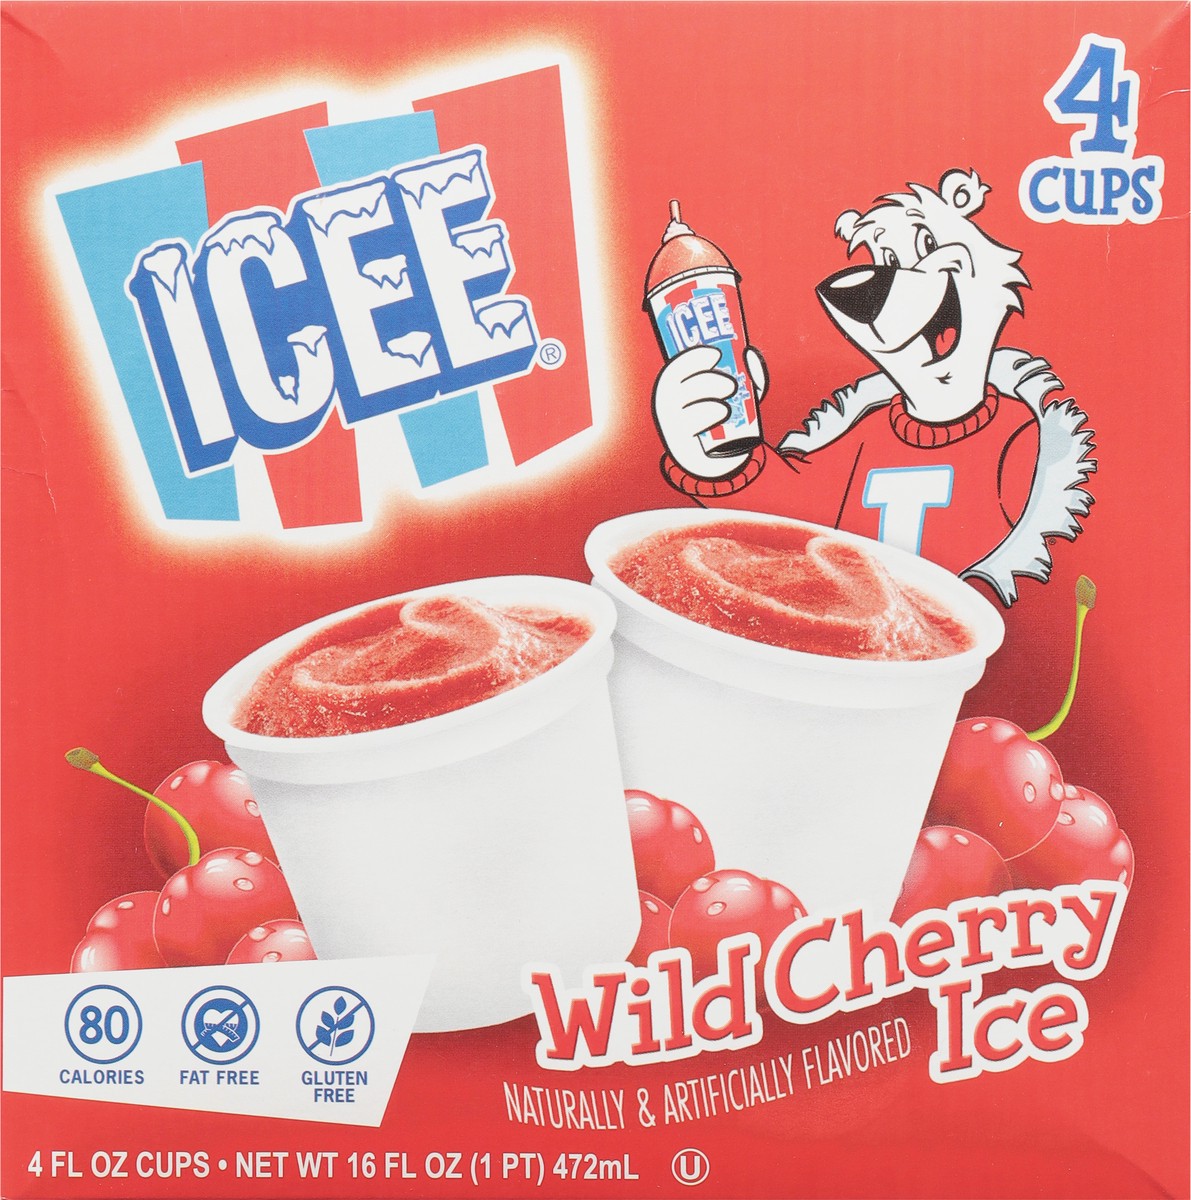 slide 10 of 11, ICEE Wild Cherry Ice Cups 4 - 4 fl oz Cups, 4 ct